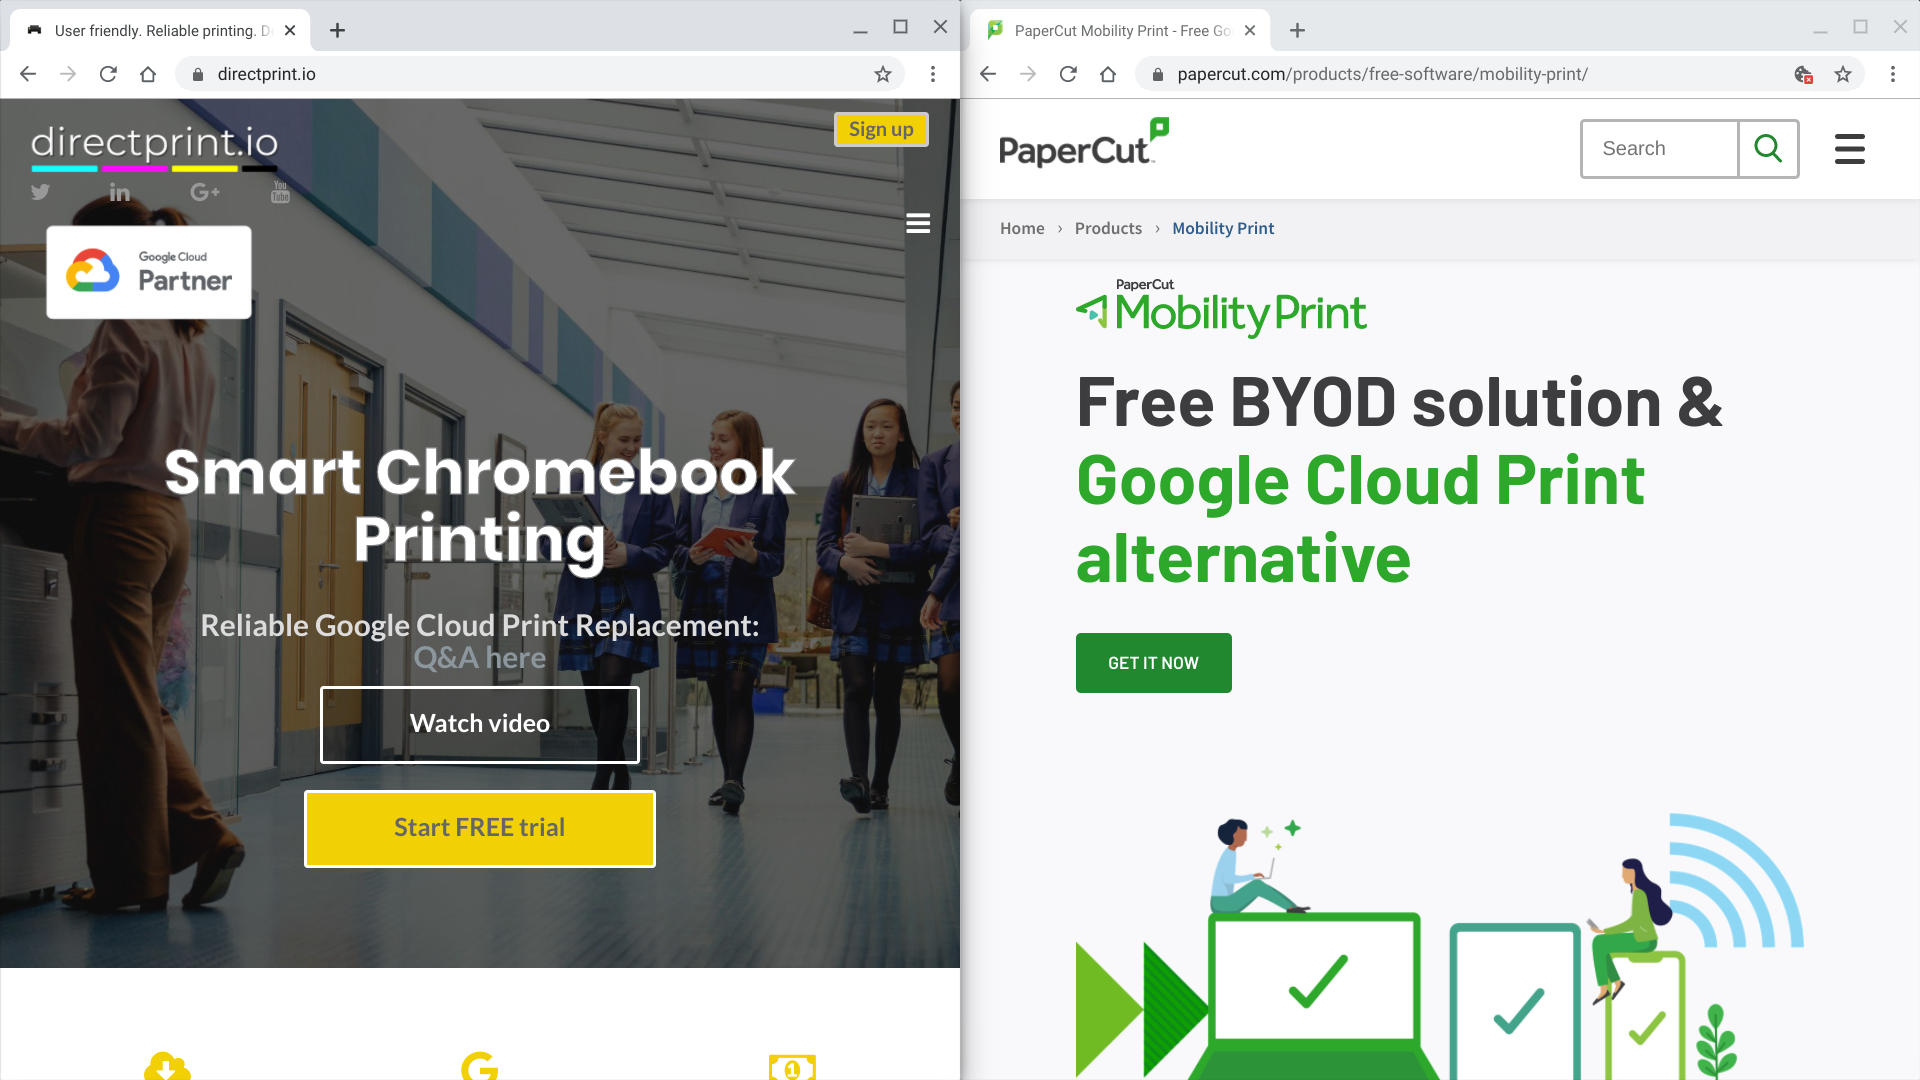 Screenshot of directprint.io screen (left) displays "Smart Chromebook Printing" and PaperCut (right) displays "Free BYOD solution & Google Cloud Print alternative"